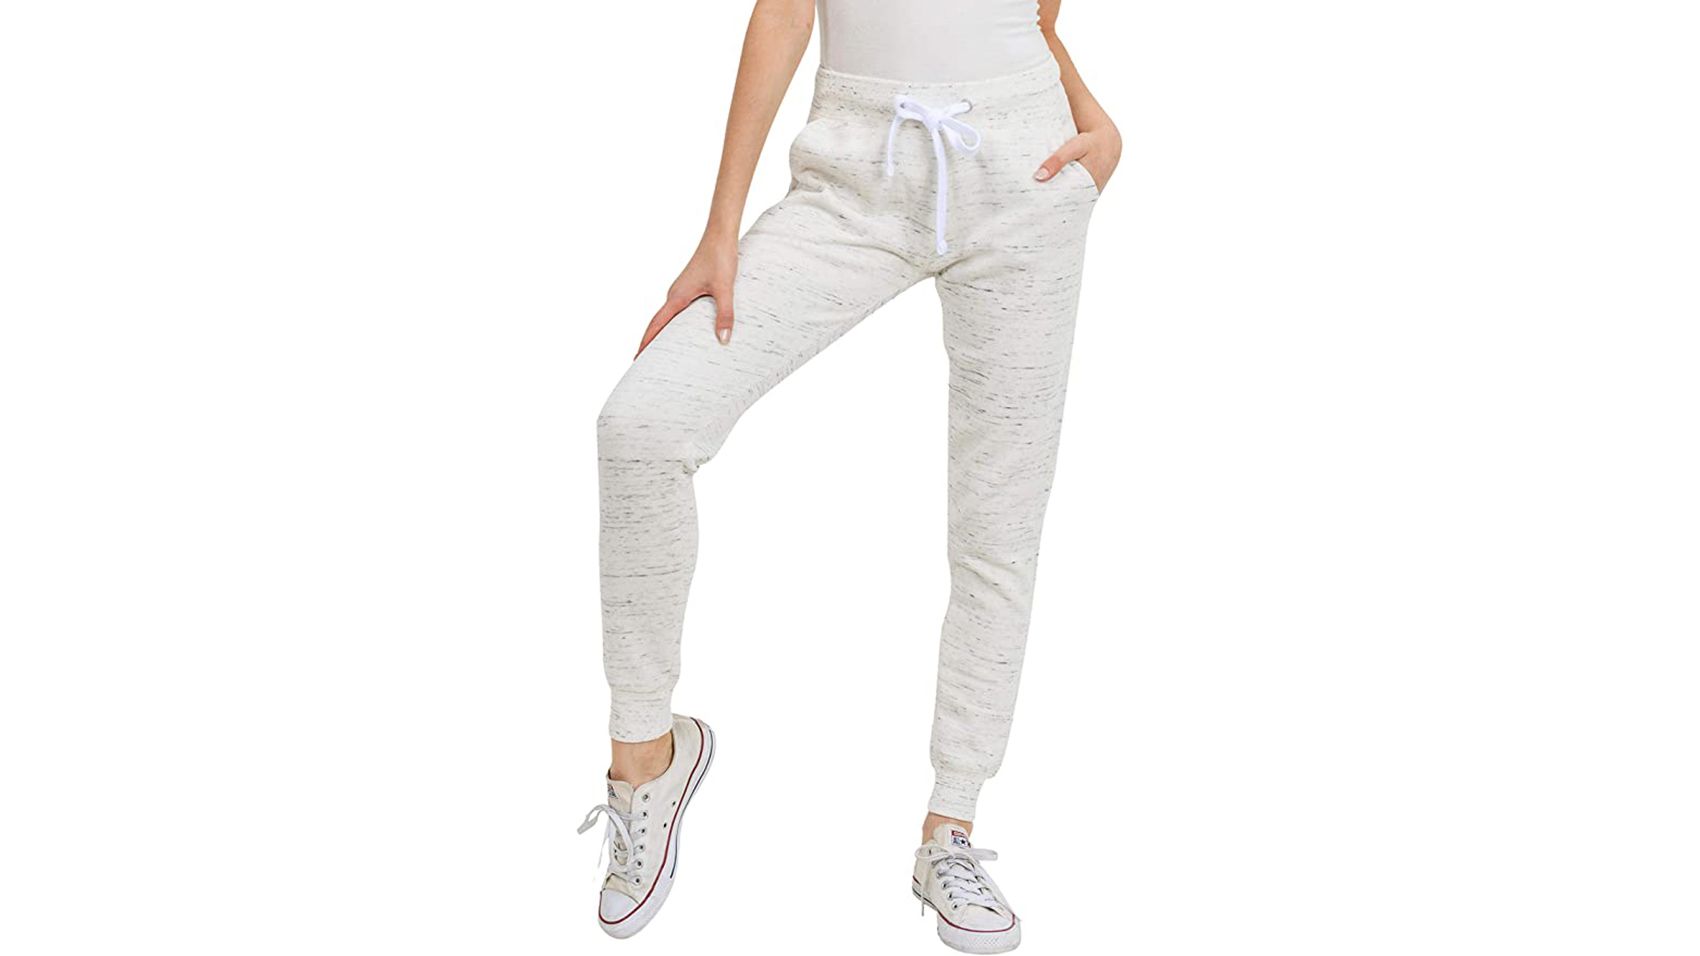 Buy ZERDOCEAN Women's Plus Size Joggers Pants Active Sweatpants